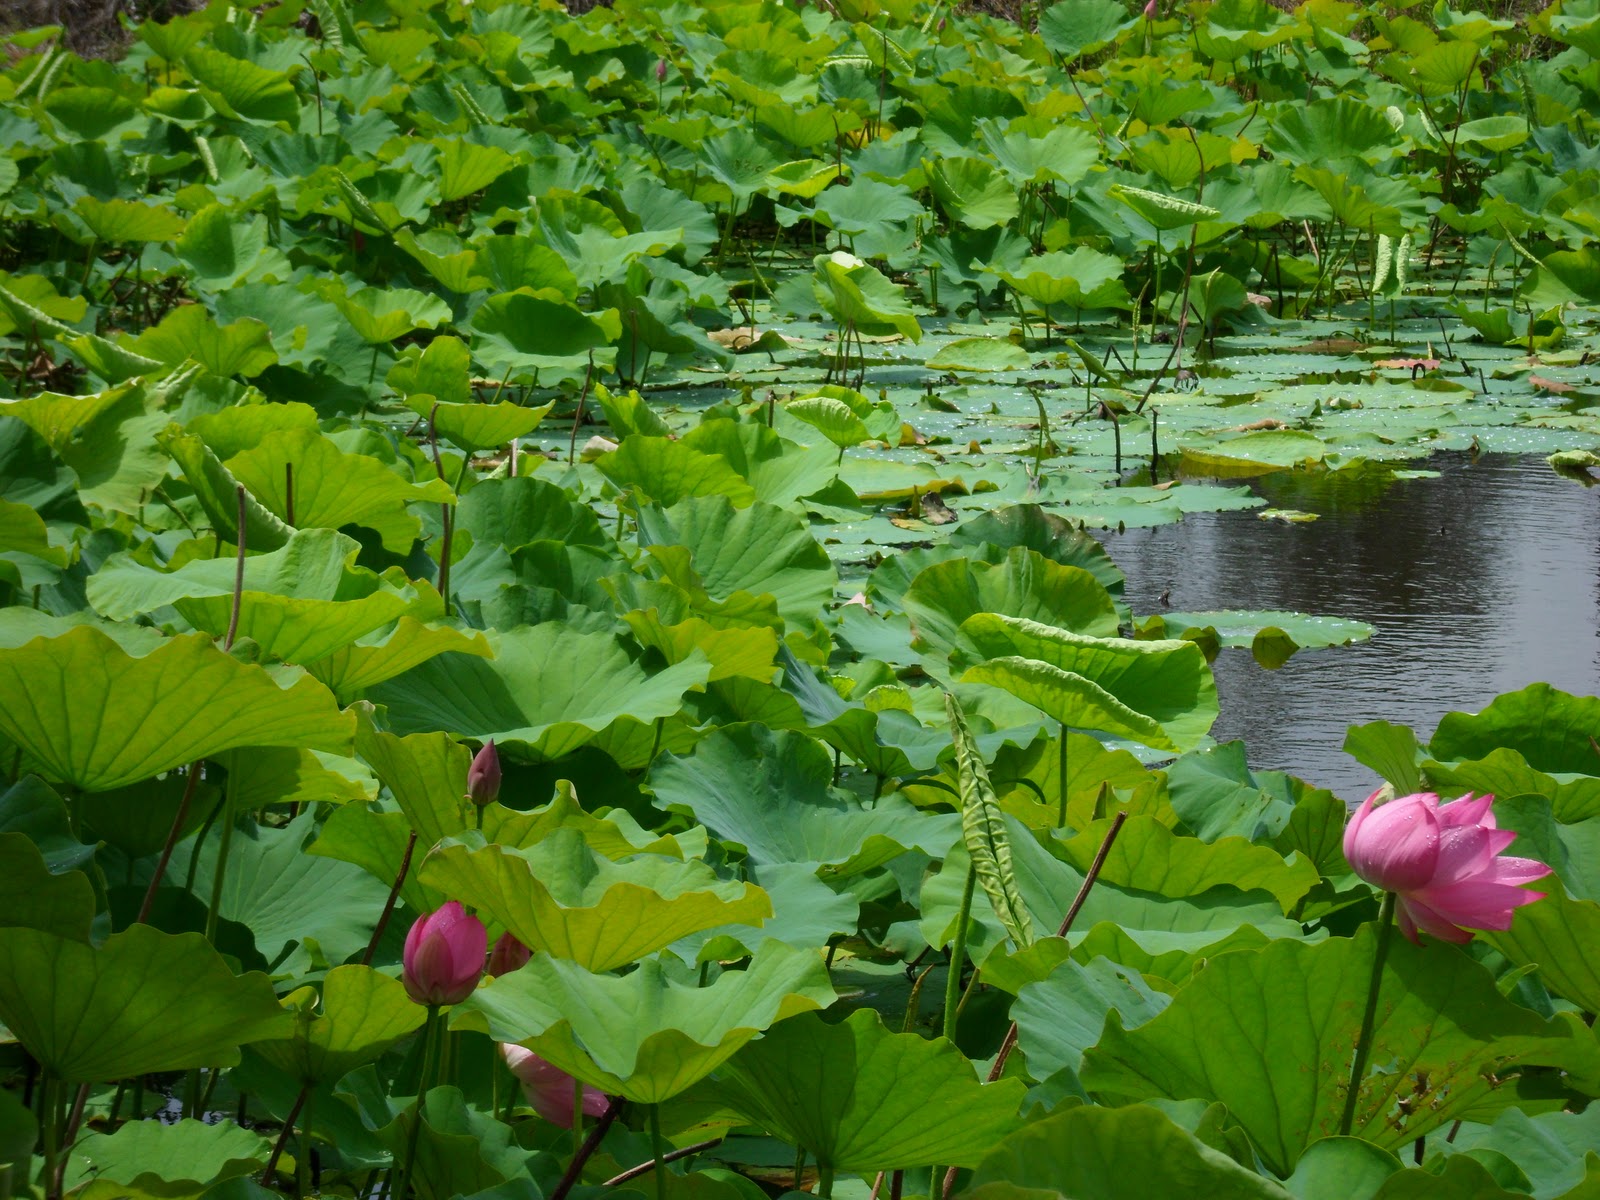 Lotus Flower growing locally